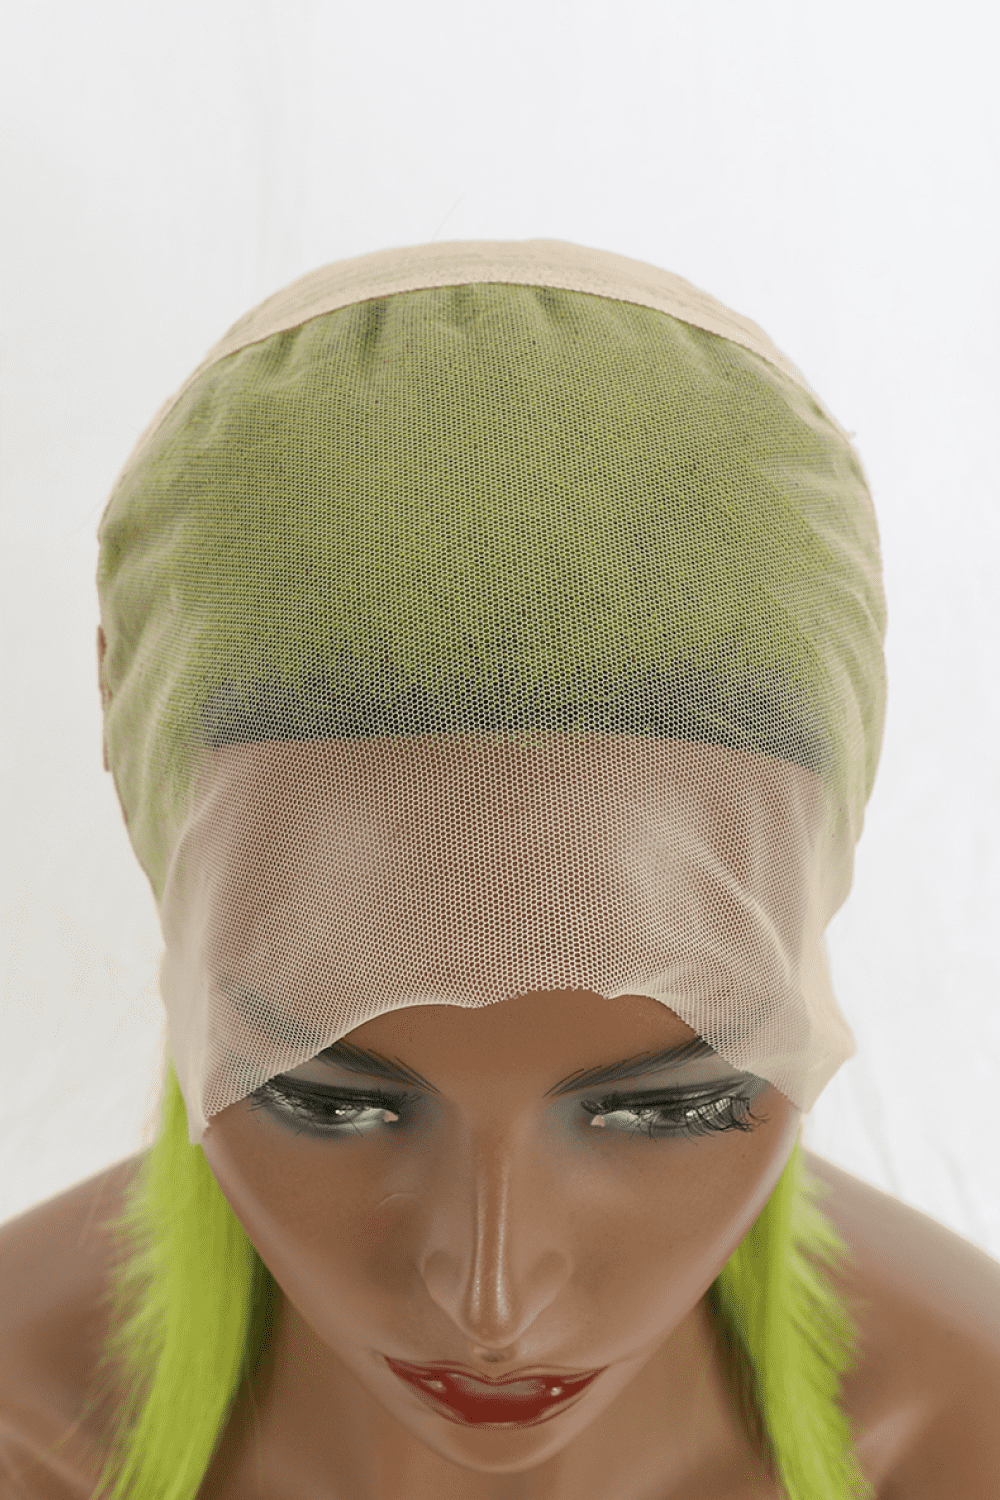 HUMAN HAIR 12" Green 165g Lace Front Wig Thick 150% Density Shoulder Length Bob